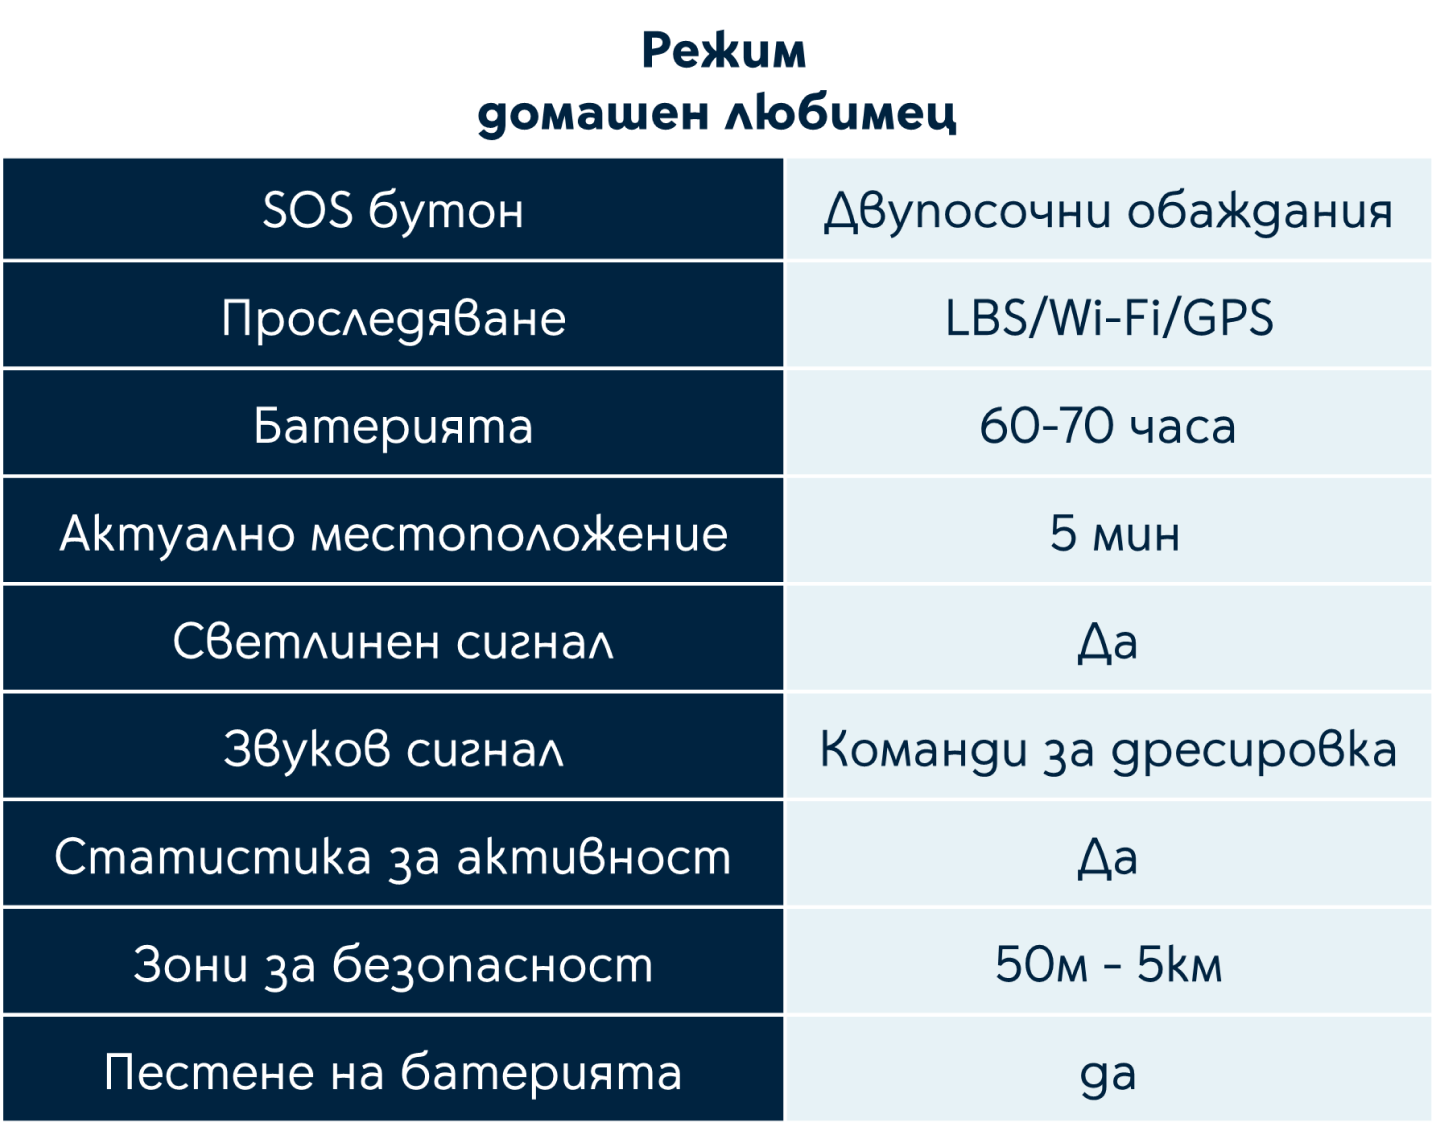 SOS Chart